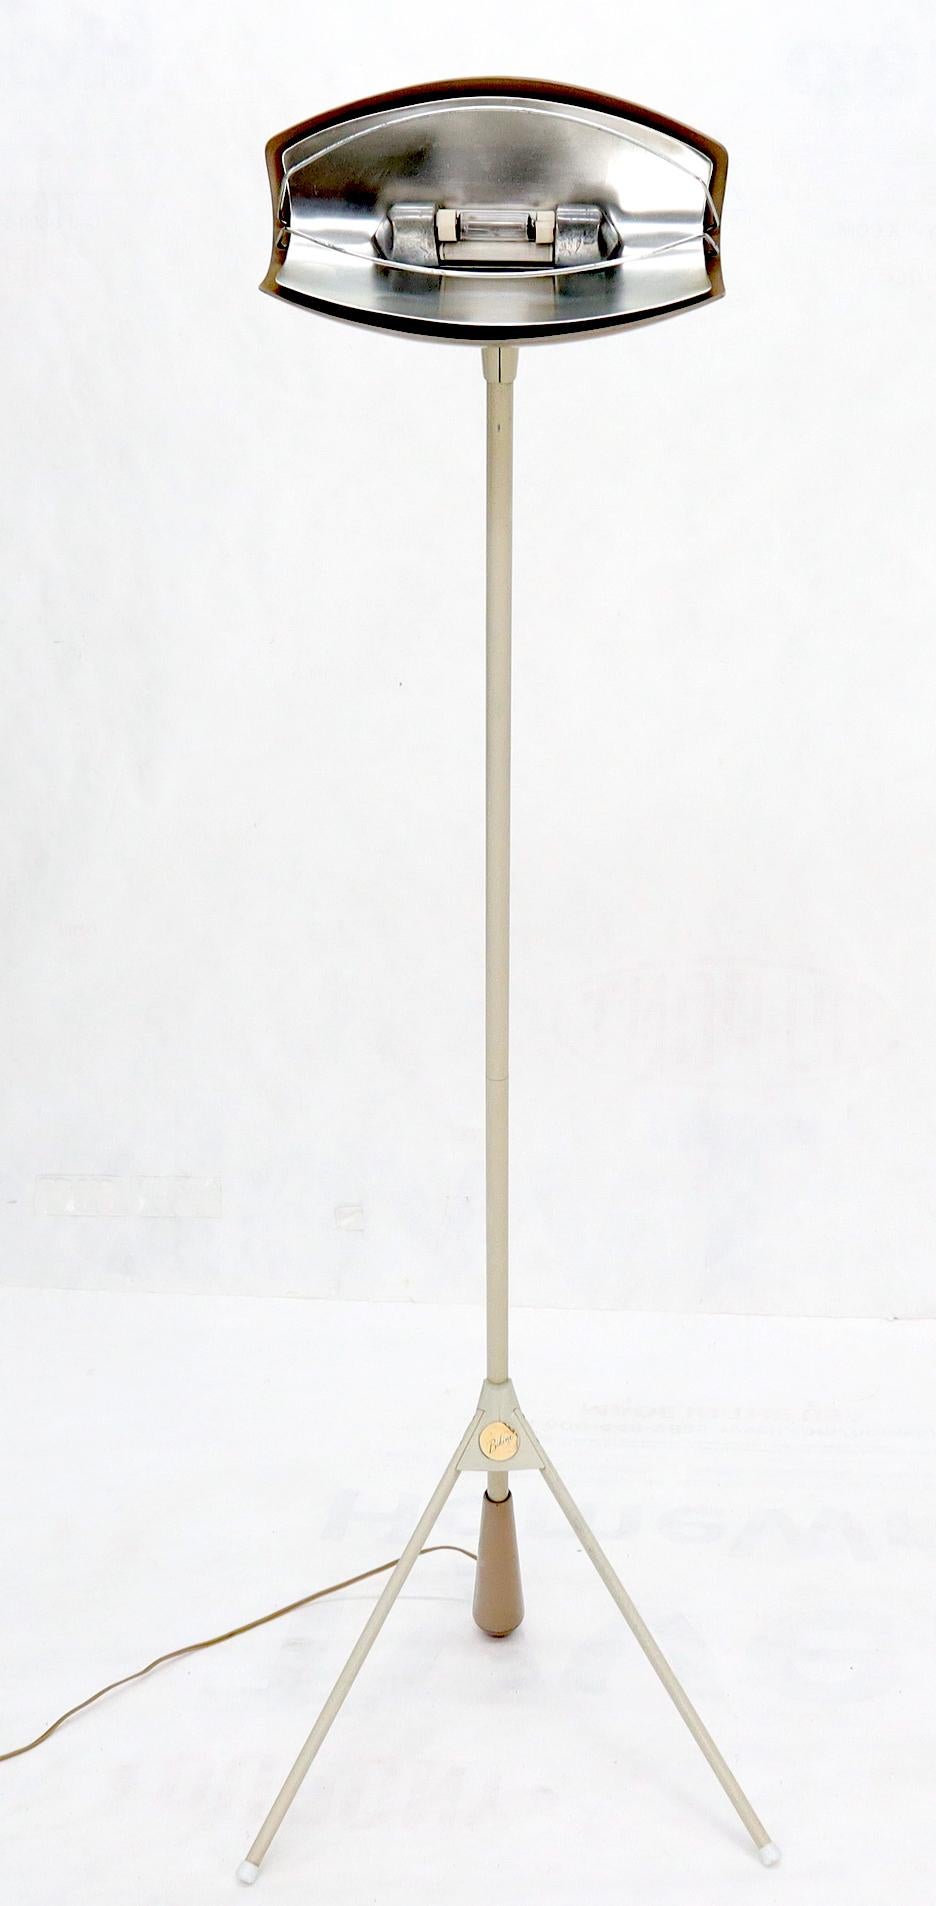 American Mid-Century Modern Tripod Stand Unusual Floor Heat Solar Quartz Lamp by Bikini For Sale